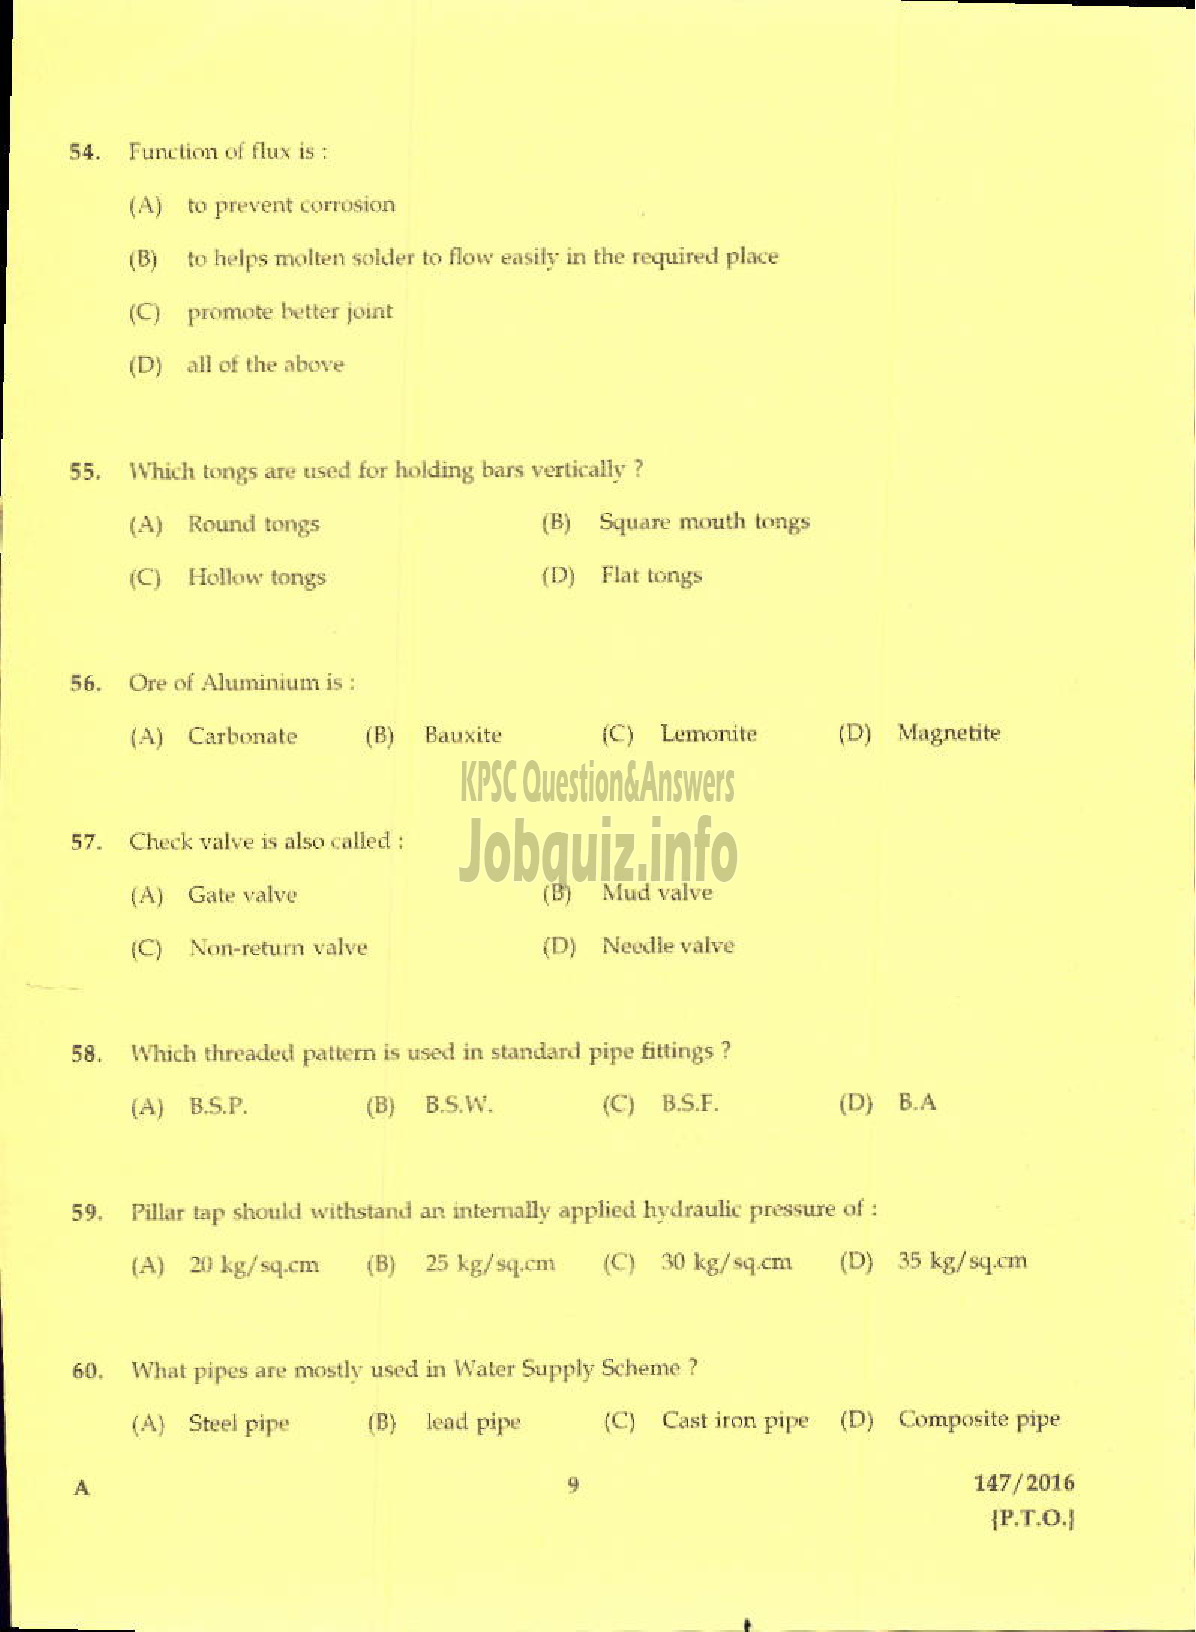 Kerala PSC Question Paper - TRADESMAN PLUMBING TECHNICAL EDUCATION/PLUMBER KWA-7